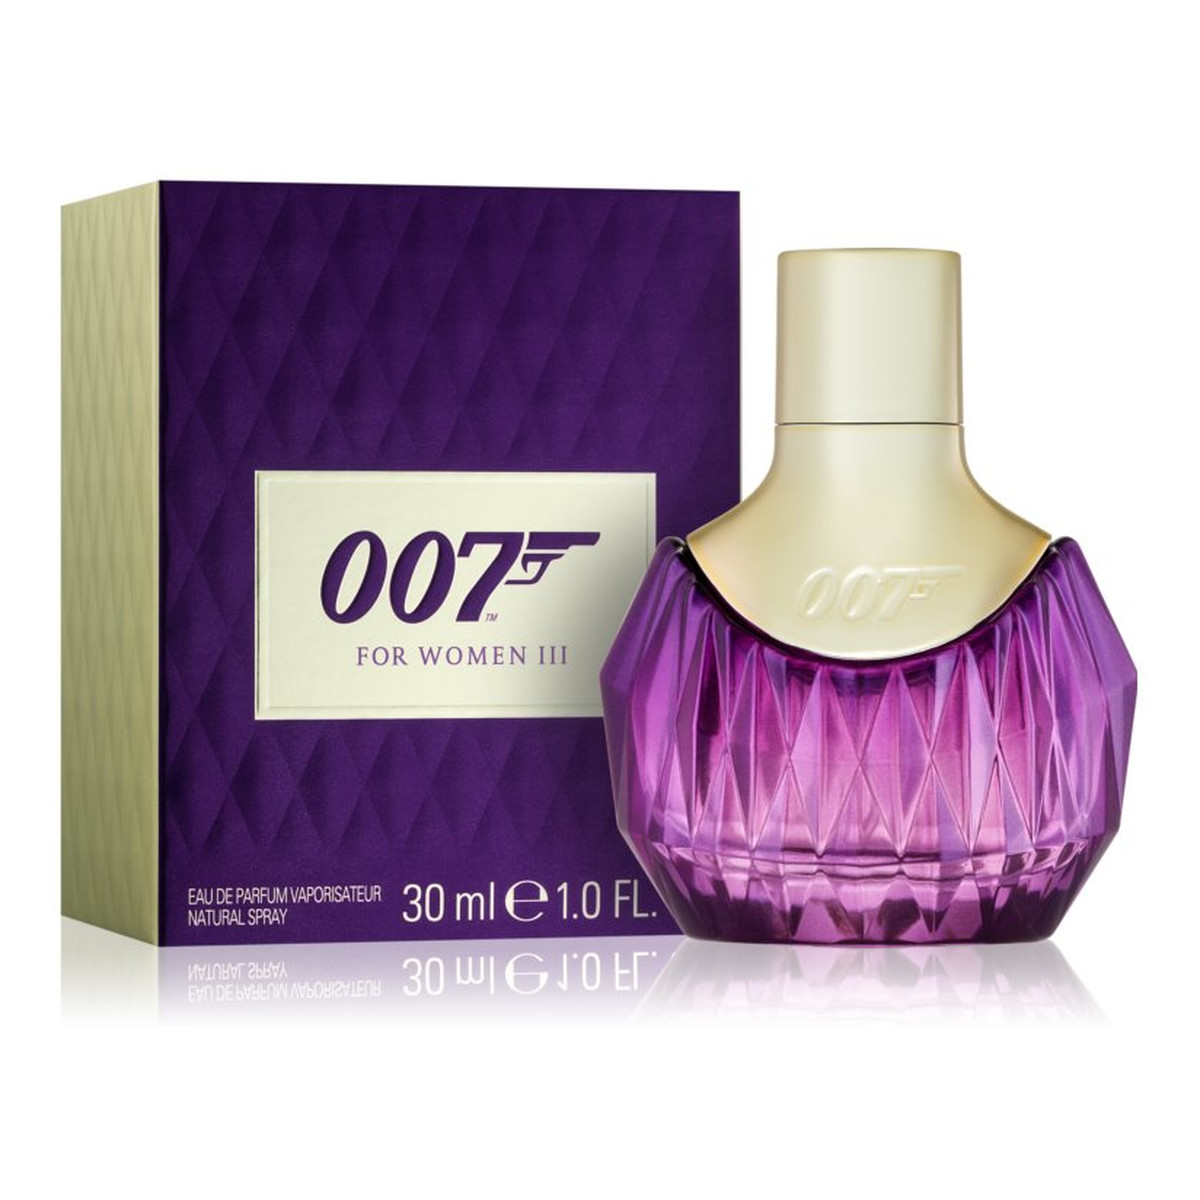 James Bond 007 for Women III woda perfumowana 30ml